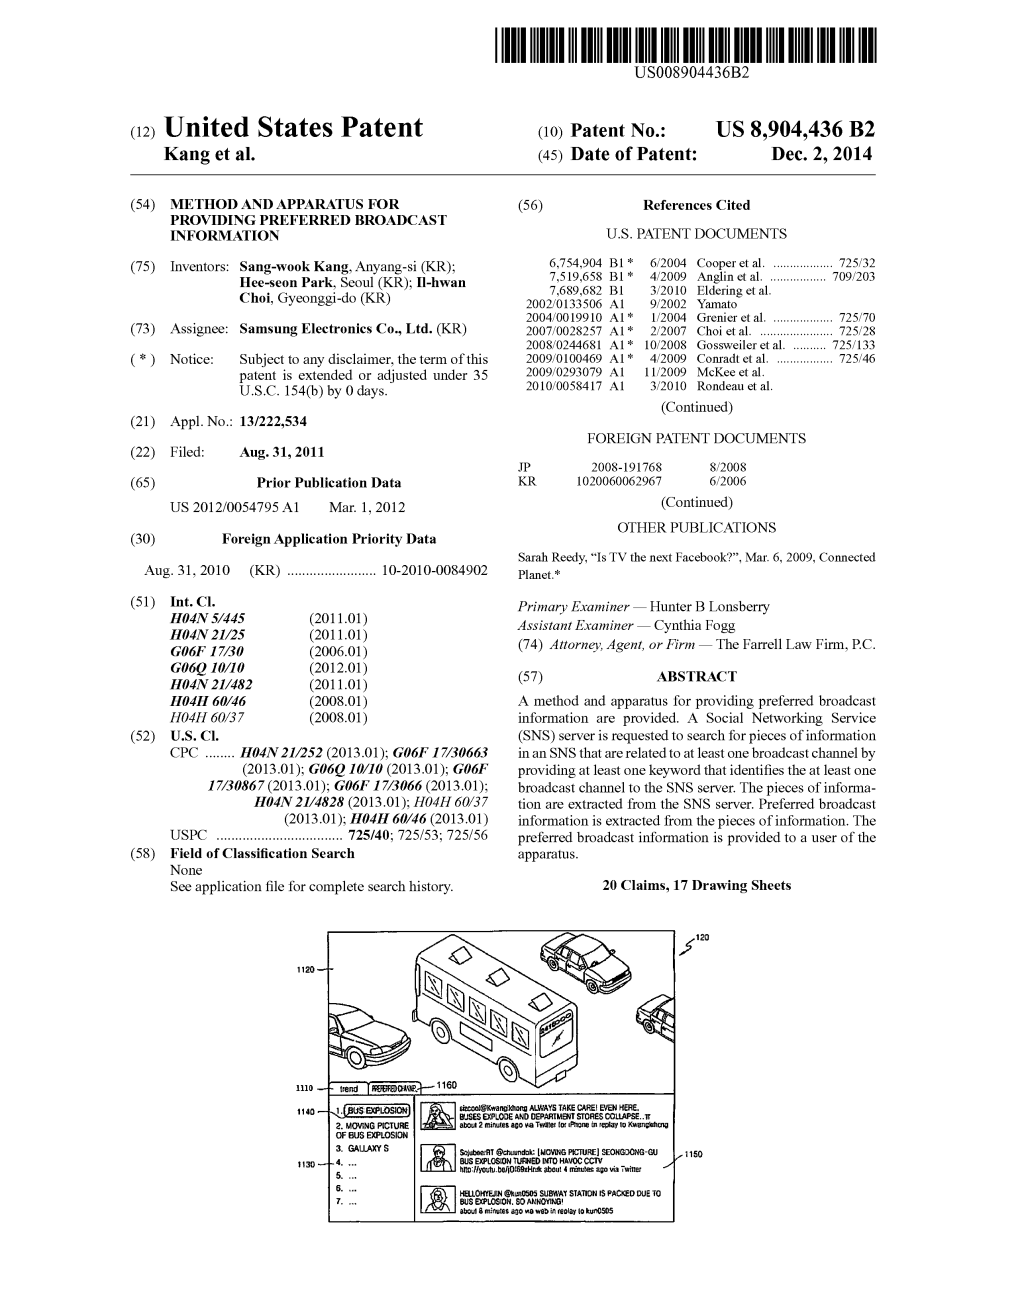 (12) United States Patent (10) Patent N0.: US 8,904,436 B2 Kang Et A]